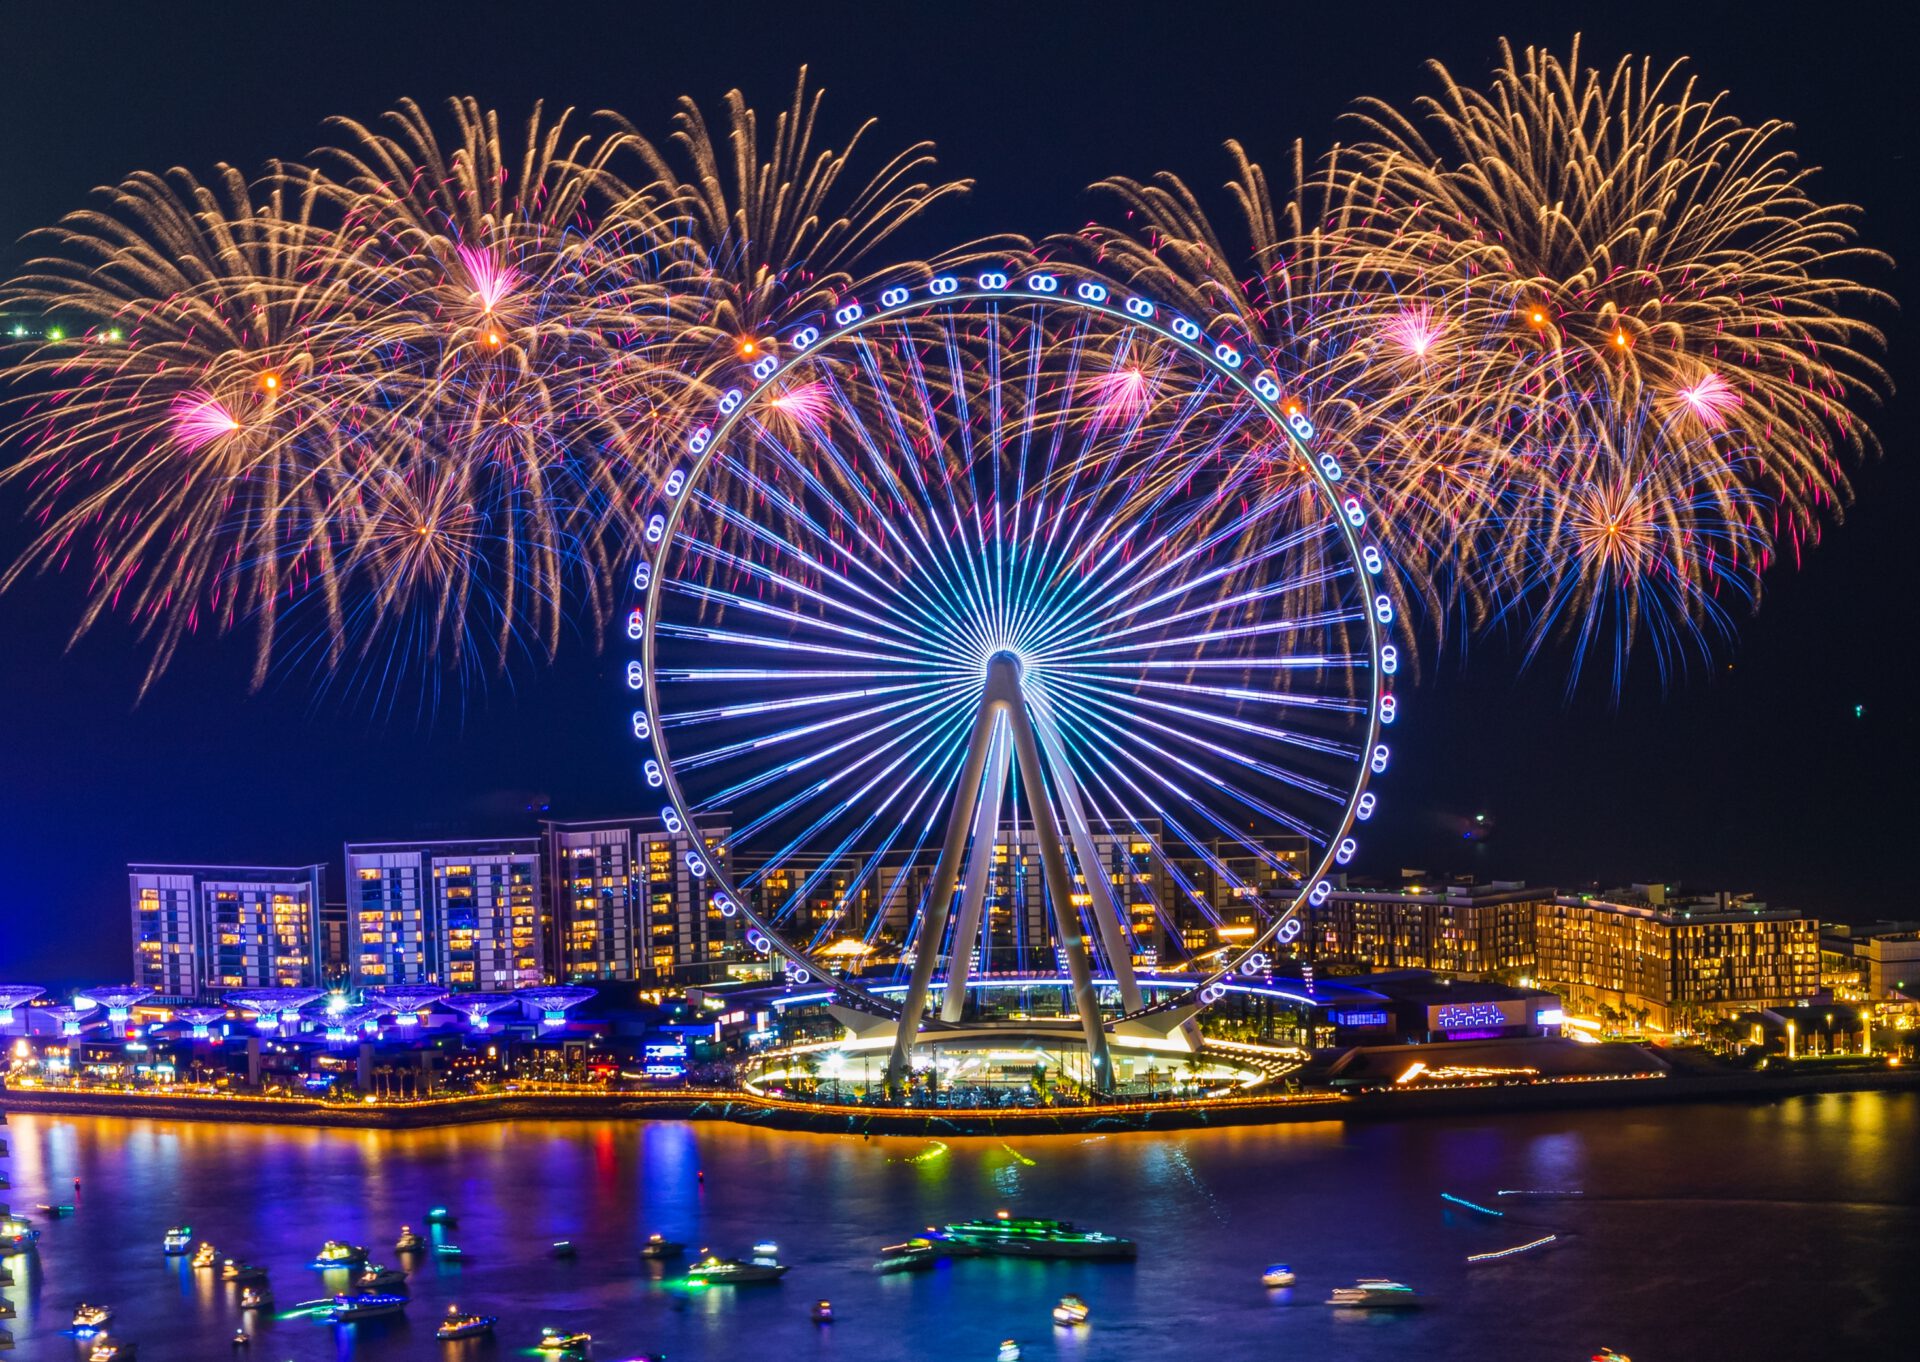 Ain Dubai Ferris Wheel - New Year's Eve fireworks